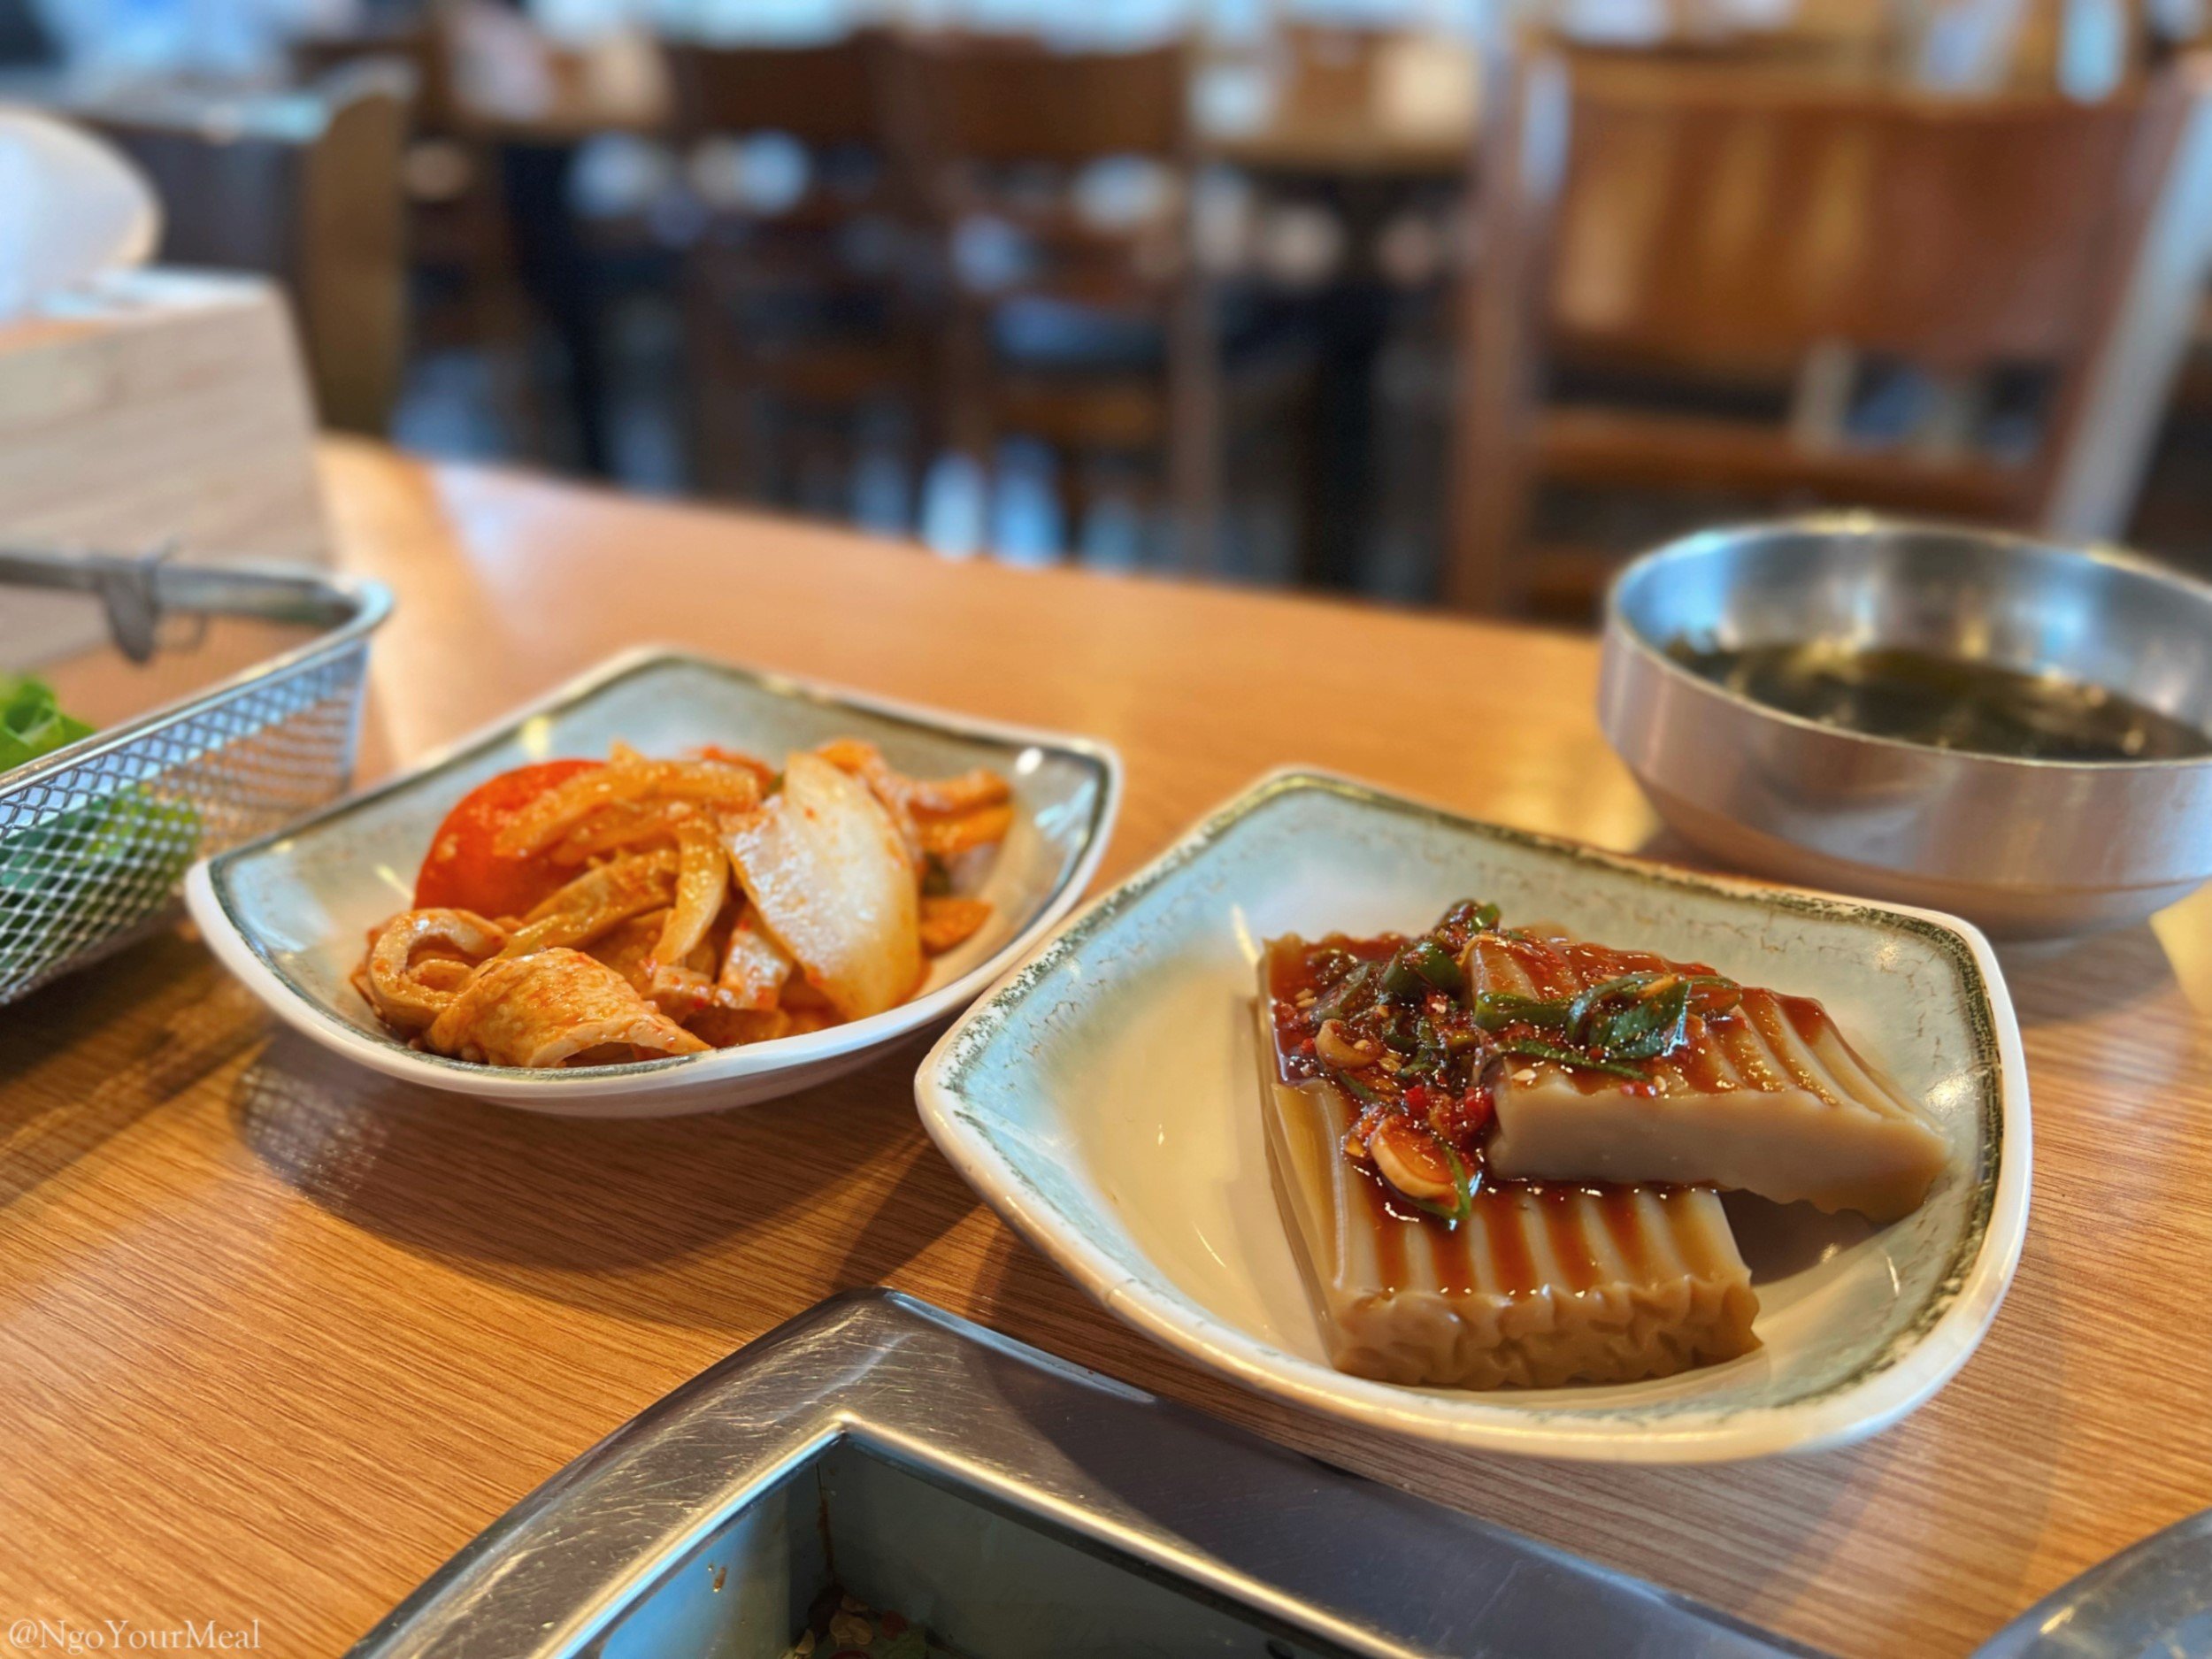 Acorn Jelly (도토리묵) and Fried Fish Cake (오뎅볶음)